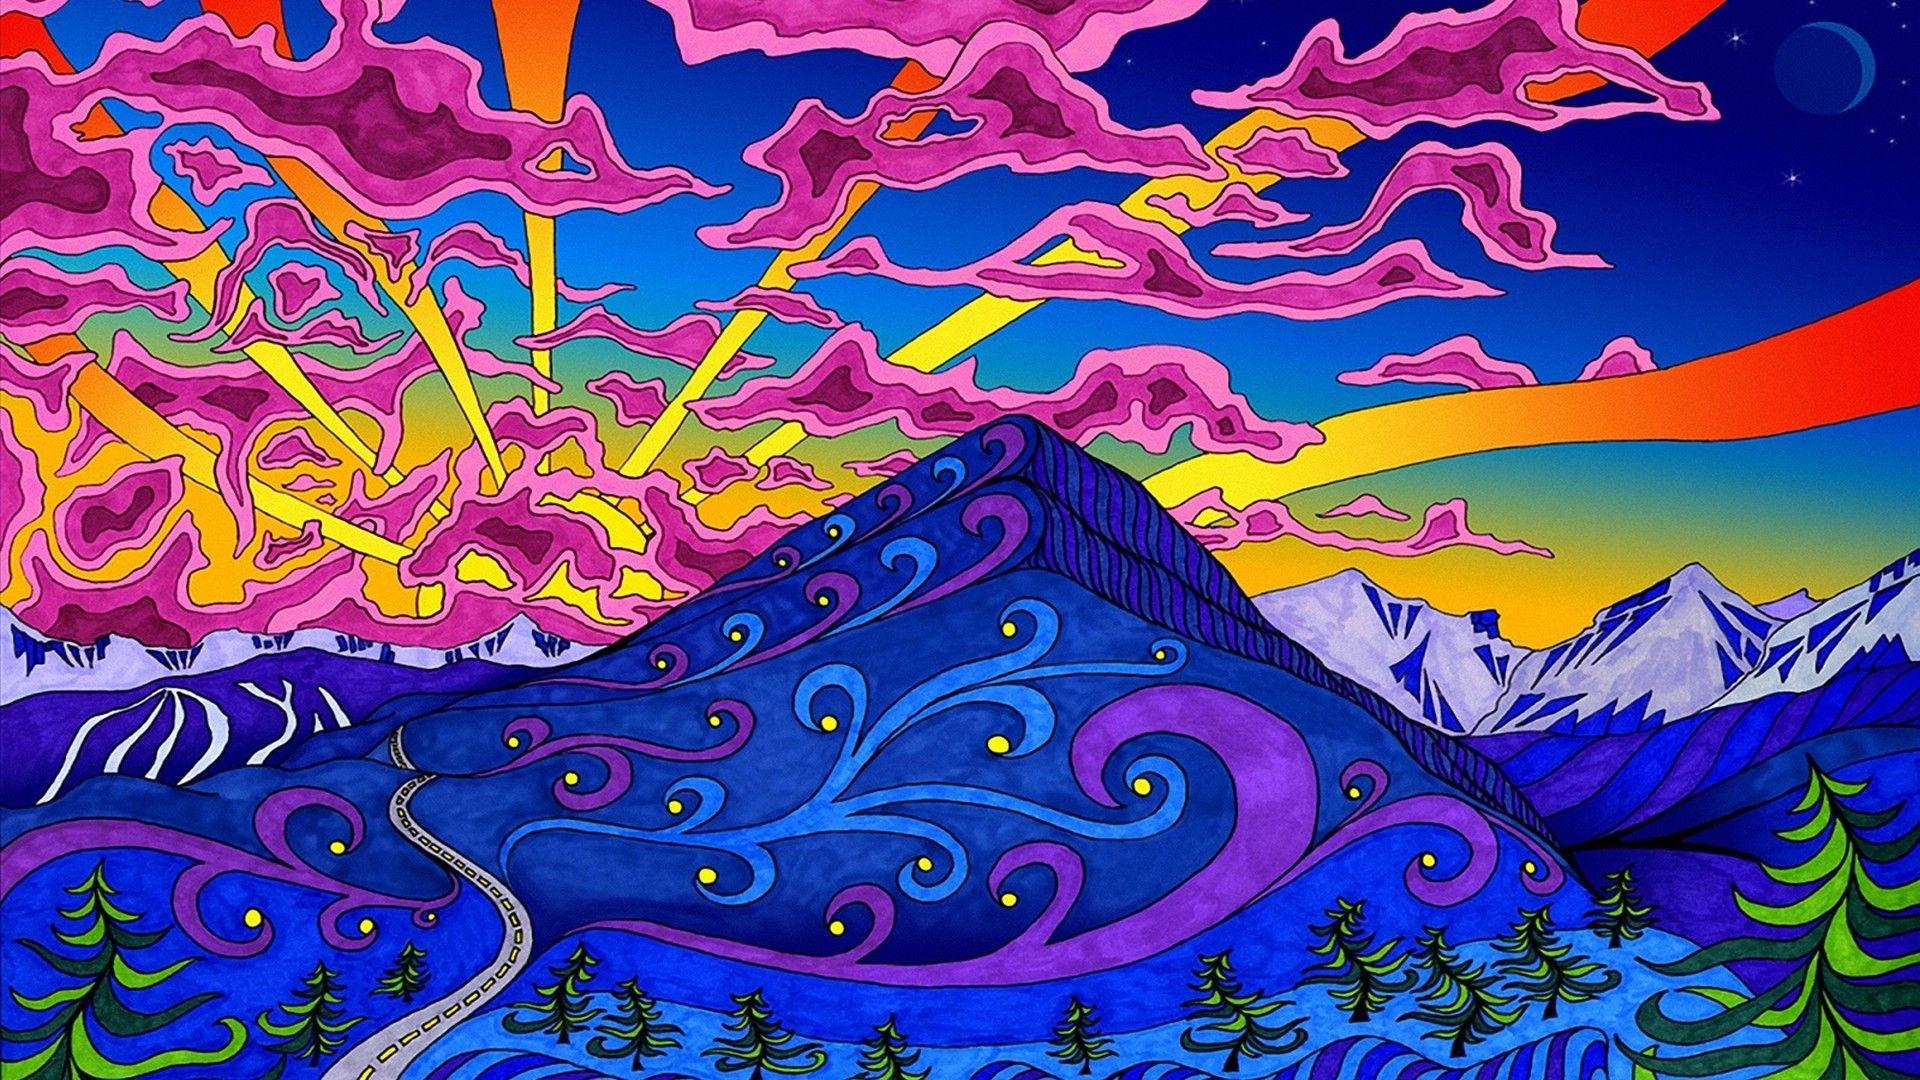 Psychedelic nature art wallpaper